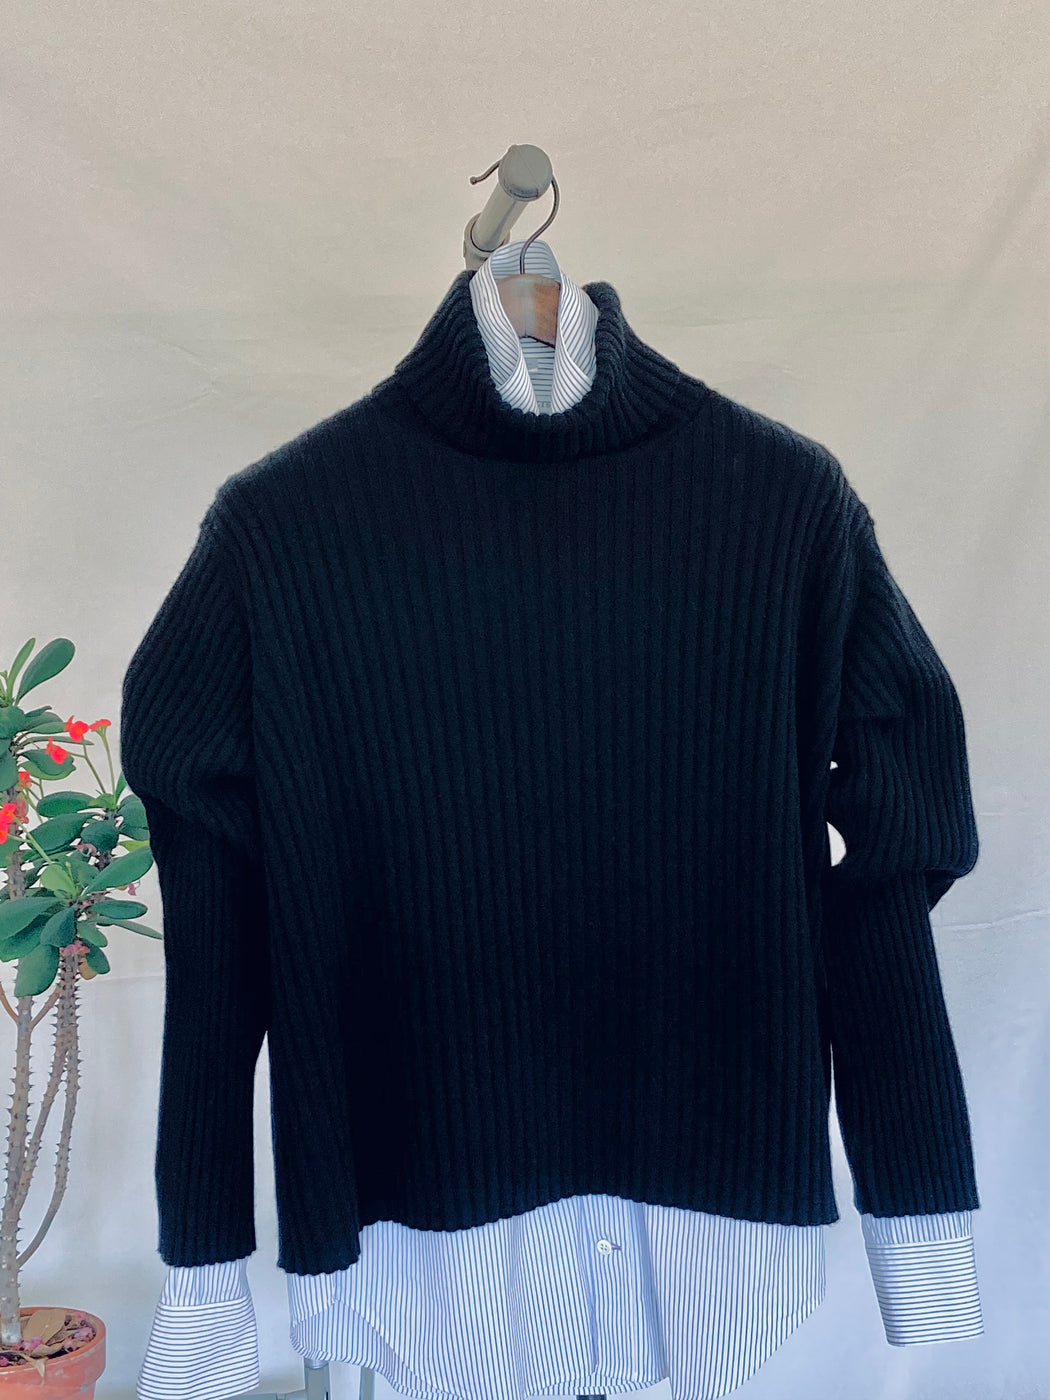 Black long sleeve turtleneck sweater